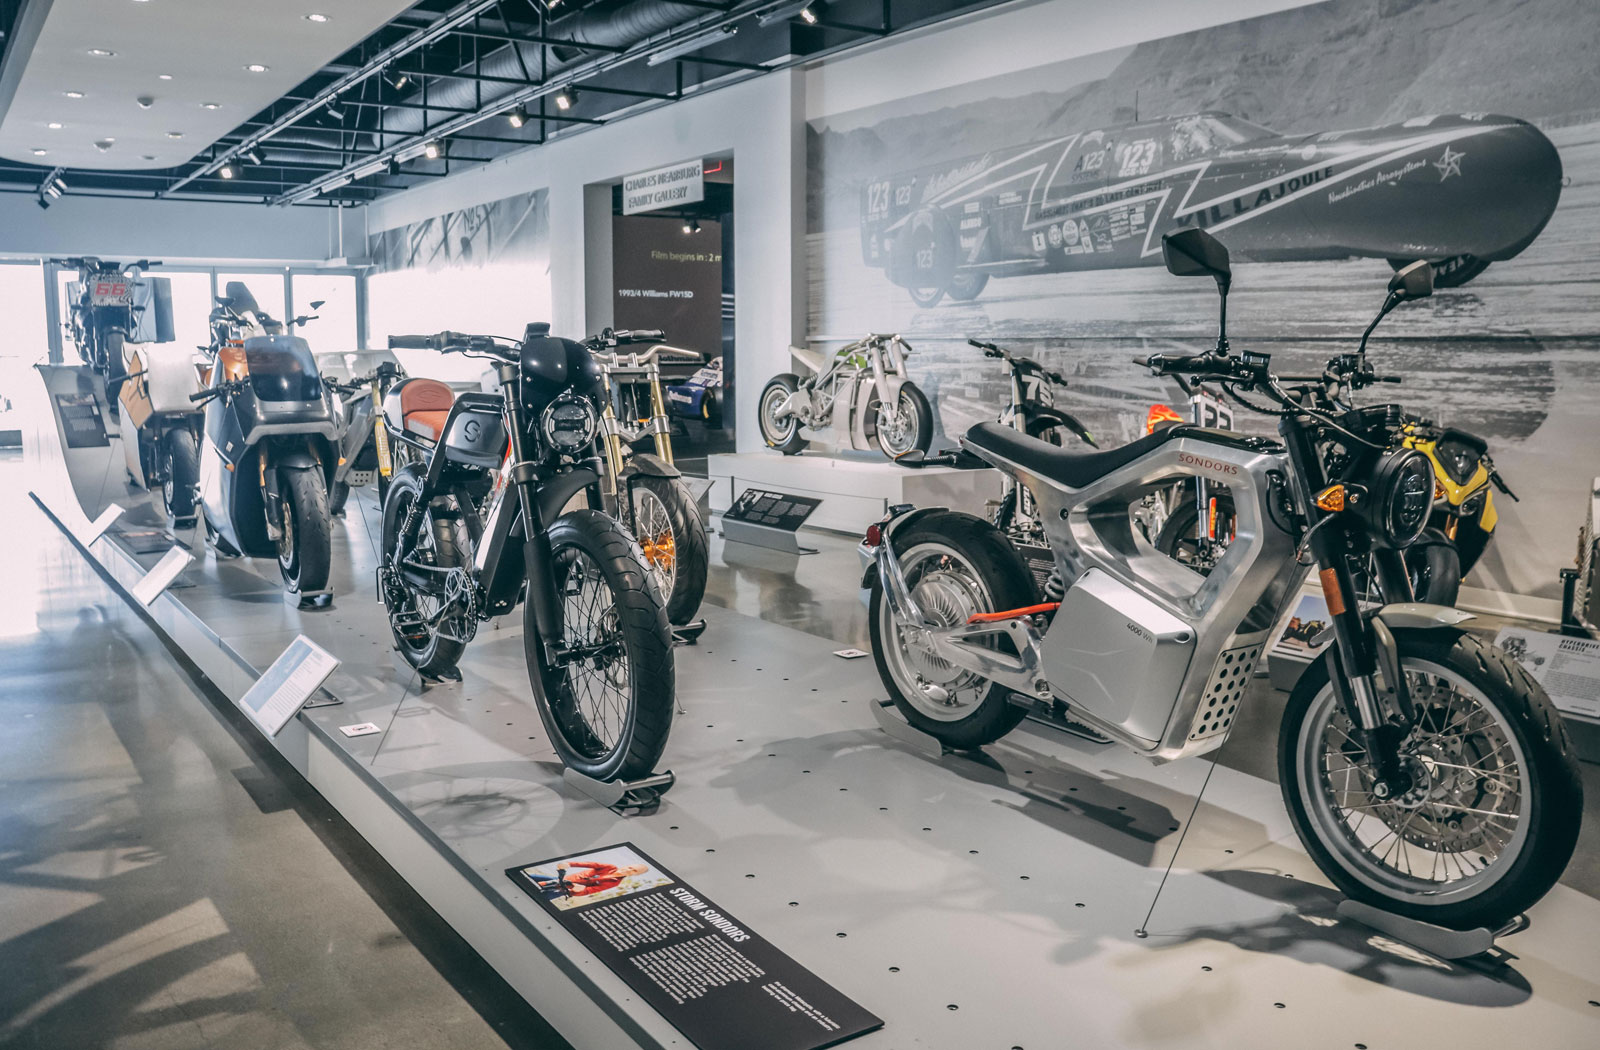 Electric Revolutionaries electric motorcycle exhibition